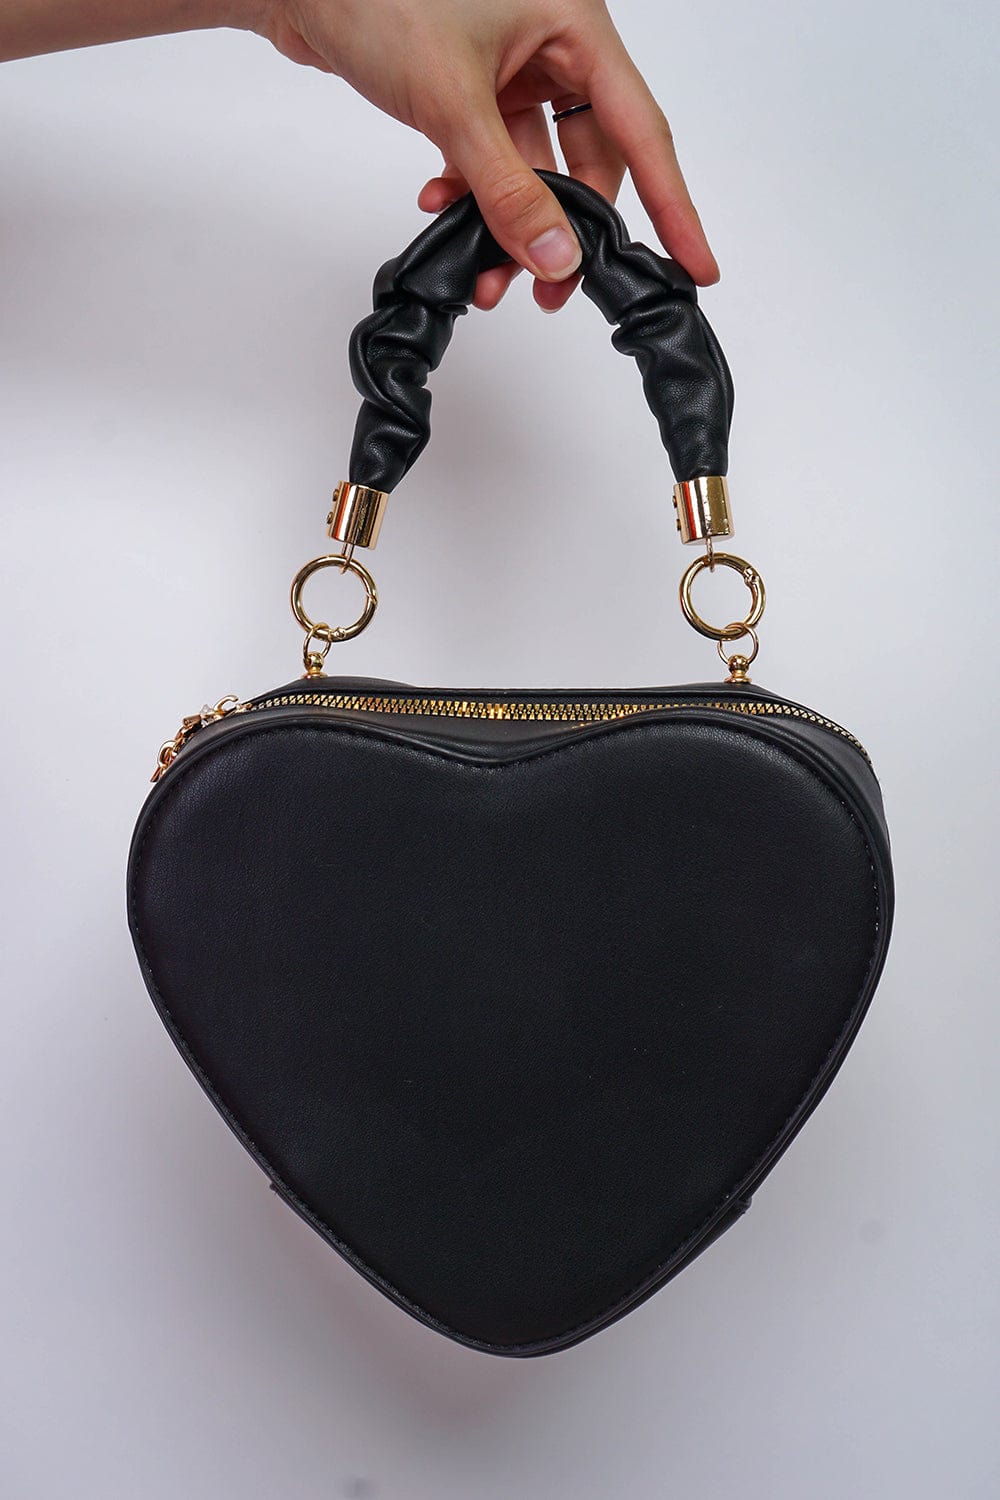 HANDBAGS Black Heart Shaped Handbag - Chloe Dao